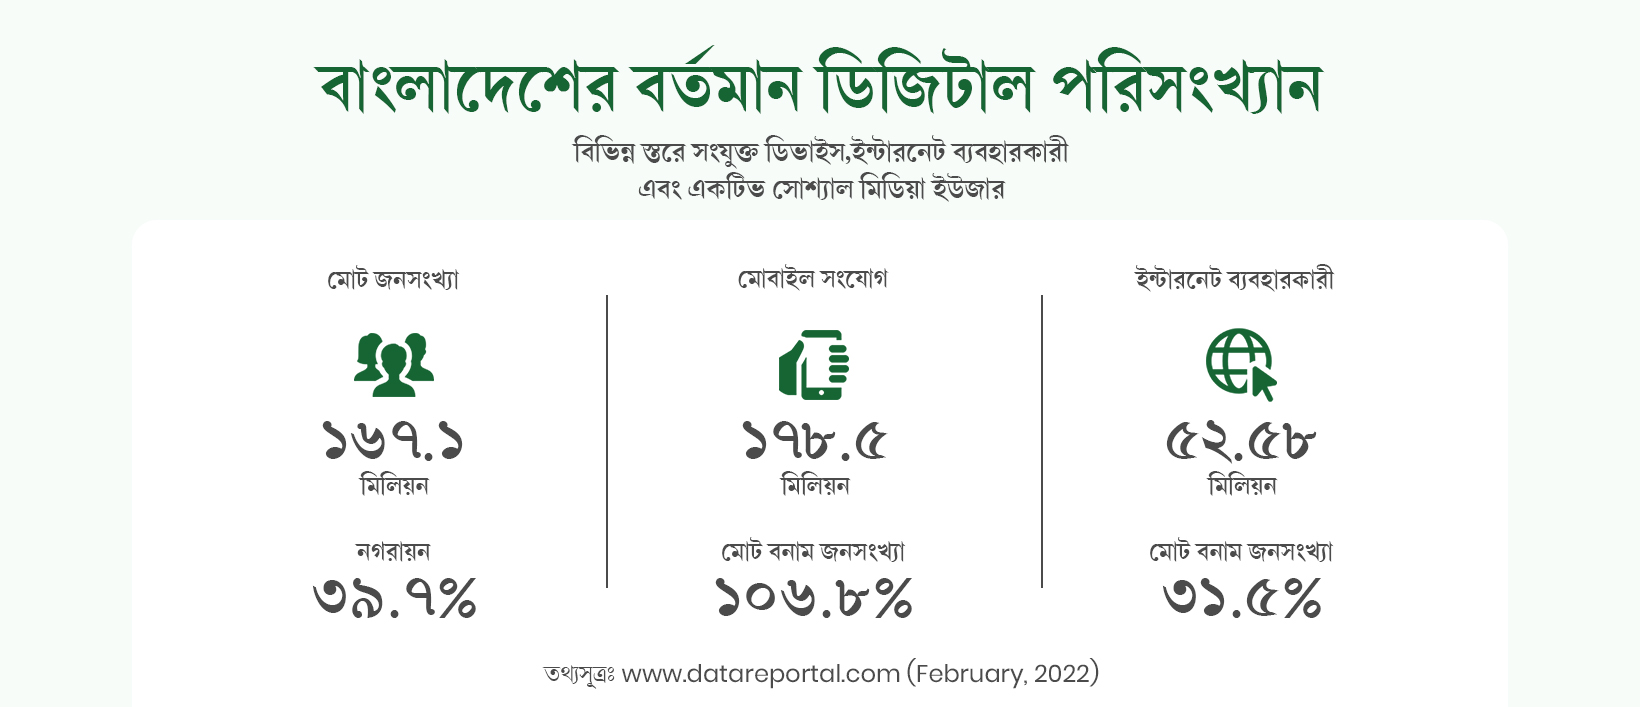 Best mobile internet package Bangladesh